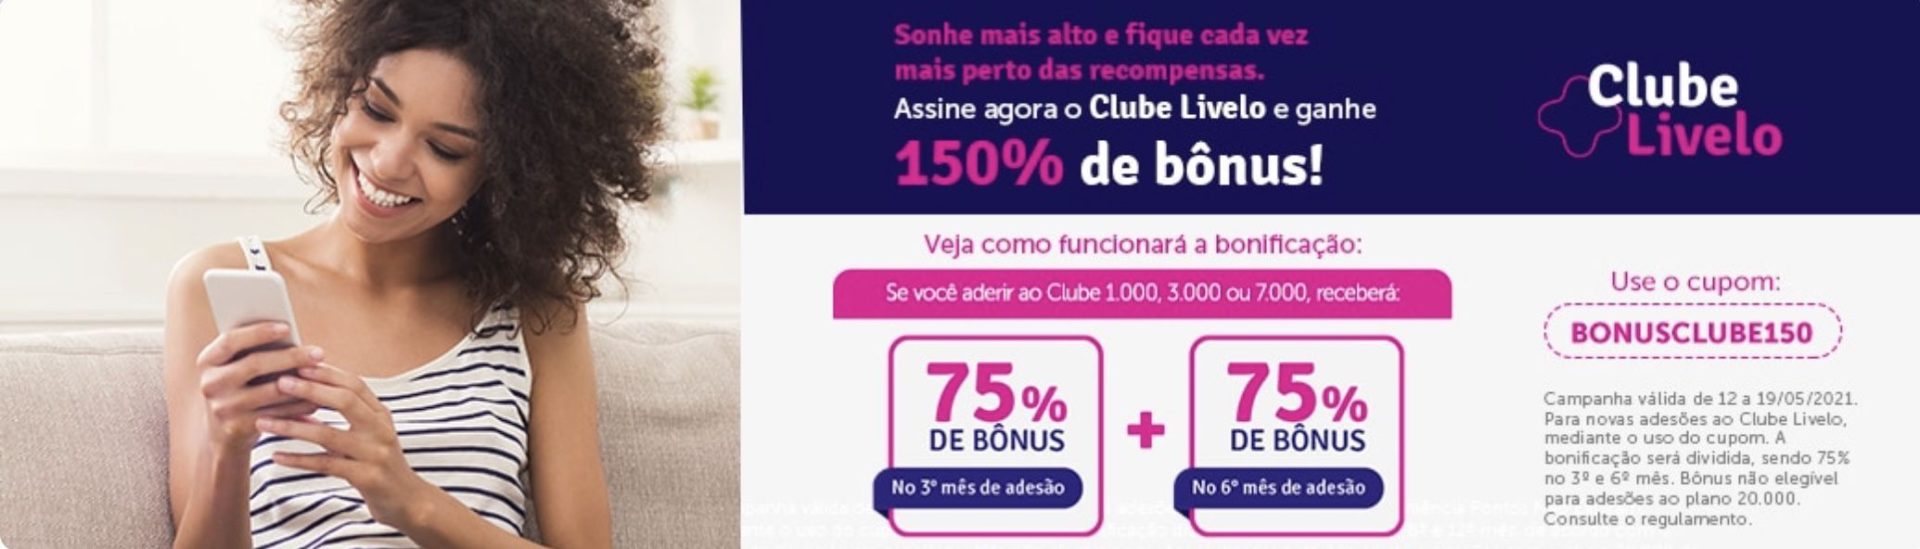 Clube Livelo 75% bônus